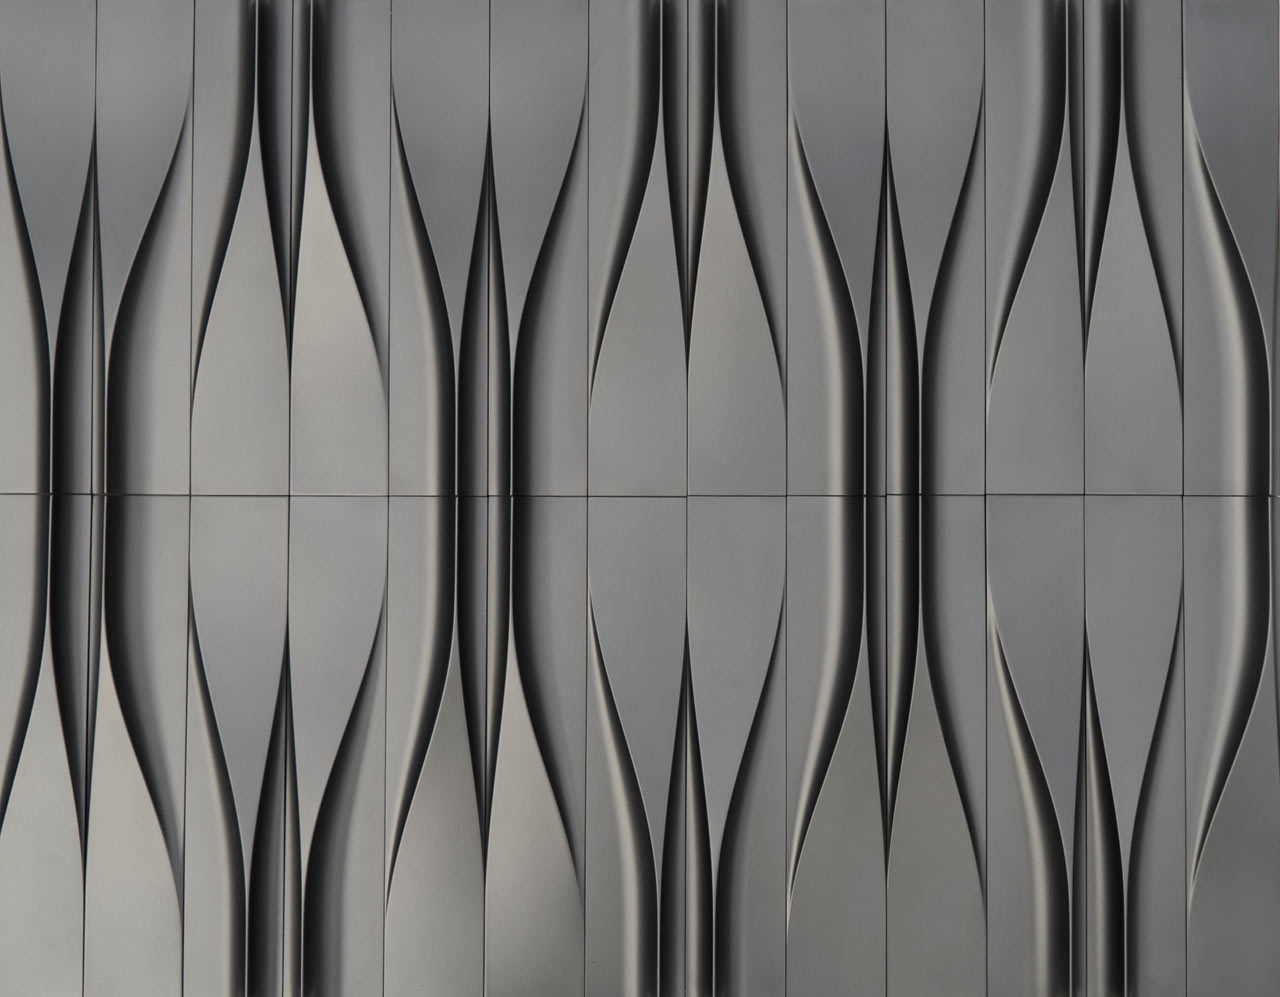 Form design idea #427: Concrete Tiles Inspired by its Original, Liquid Form